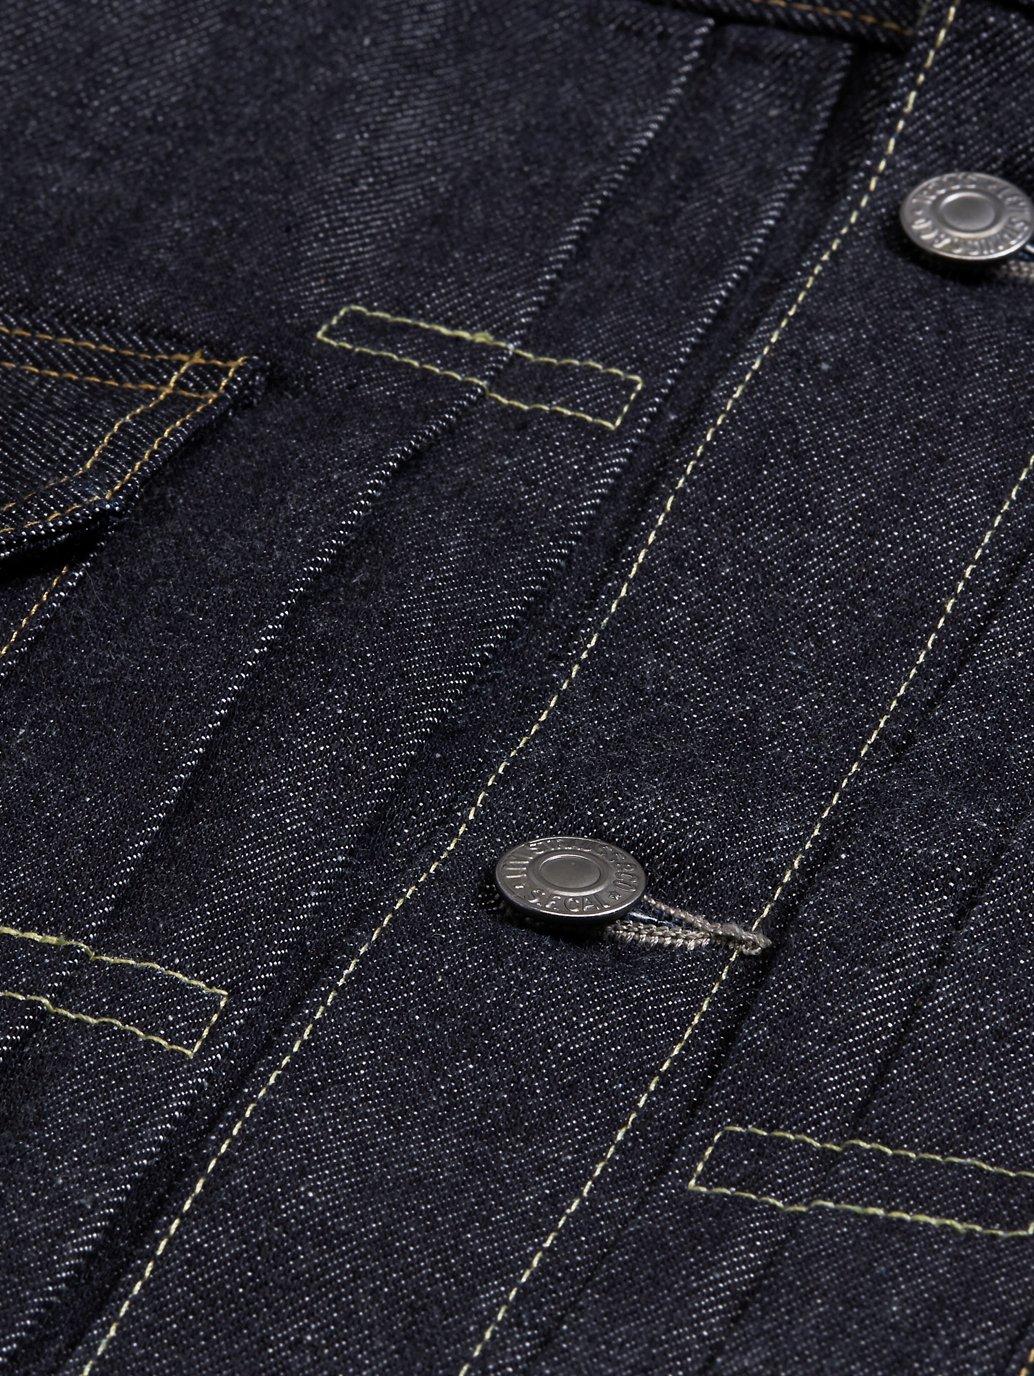 Buy Levi's® Vintage Clothing 1953 Men's Type ii Jacket | Levi’s ...